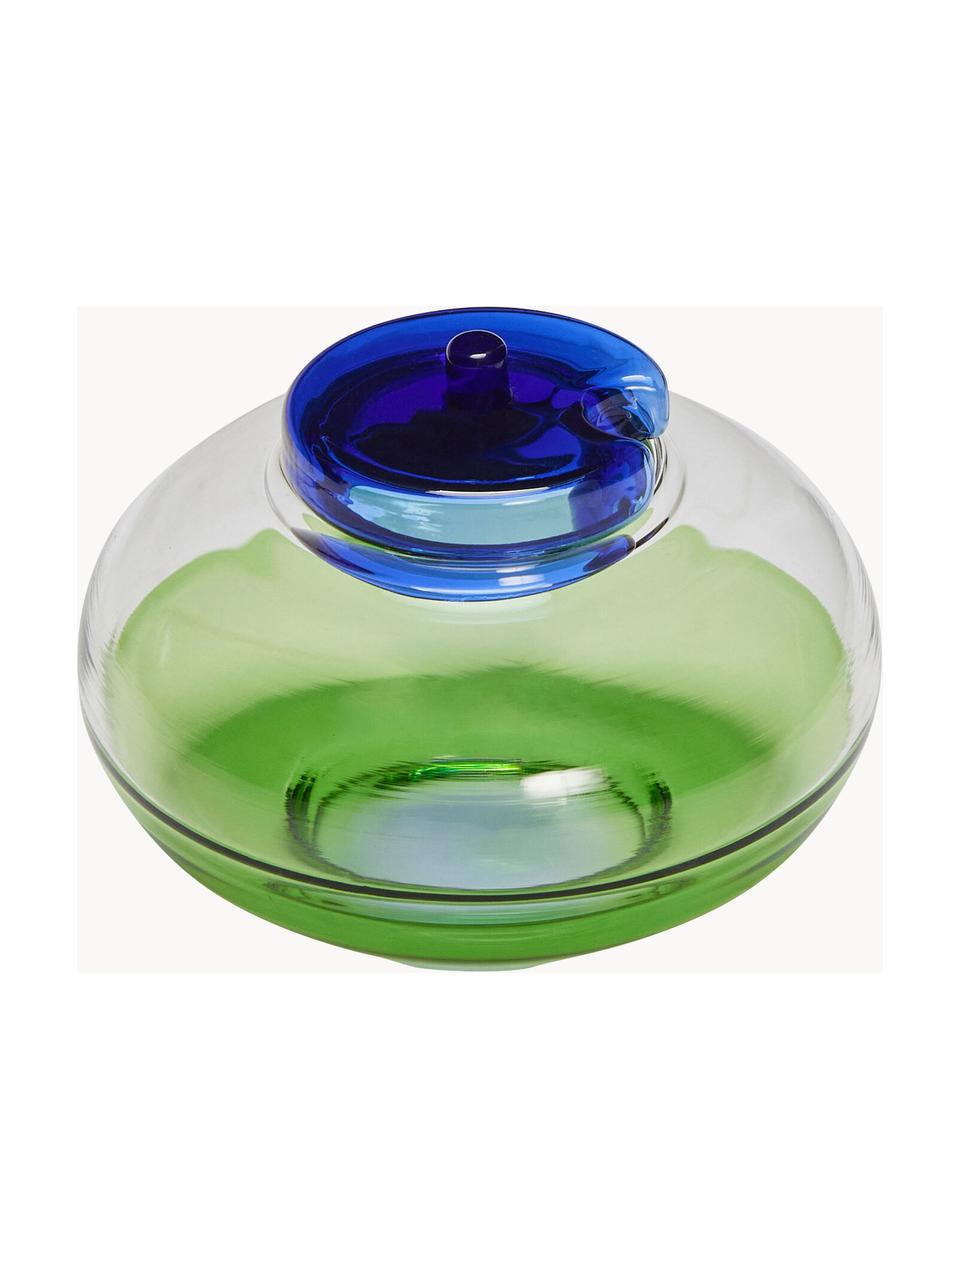 Mondgeblazen suikerpot NoRush, Glas, Donkerblauw, groen, transparant, Ø 10 x H 8 cm